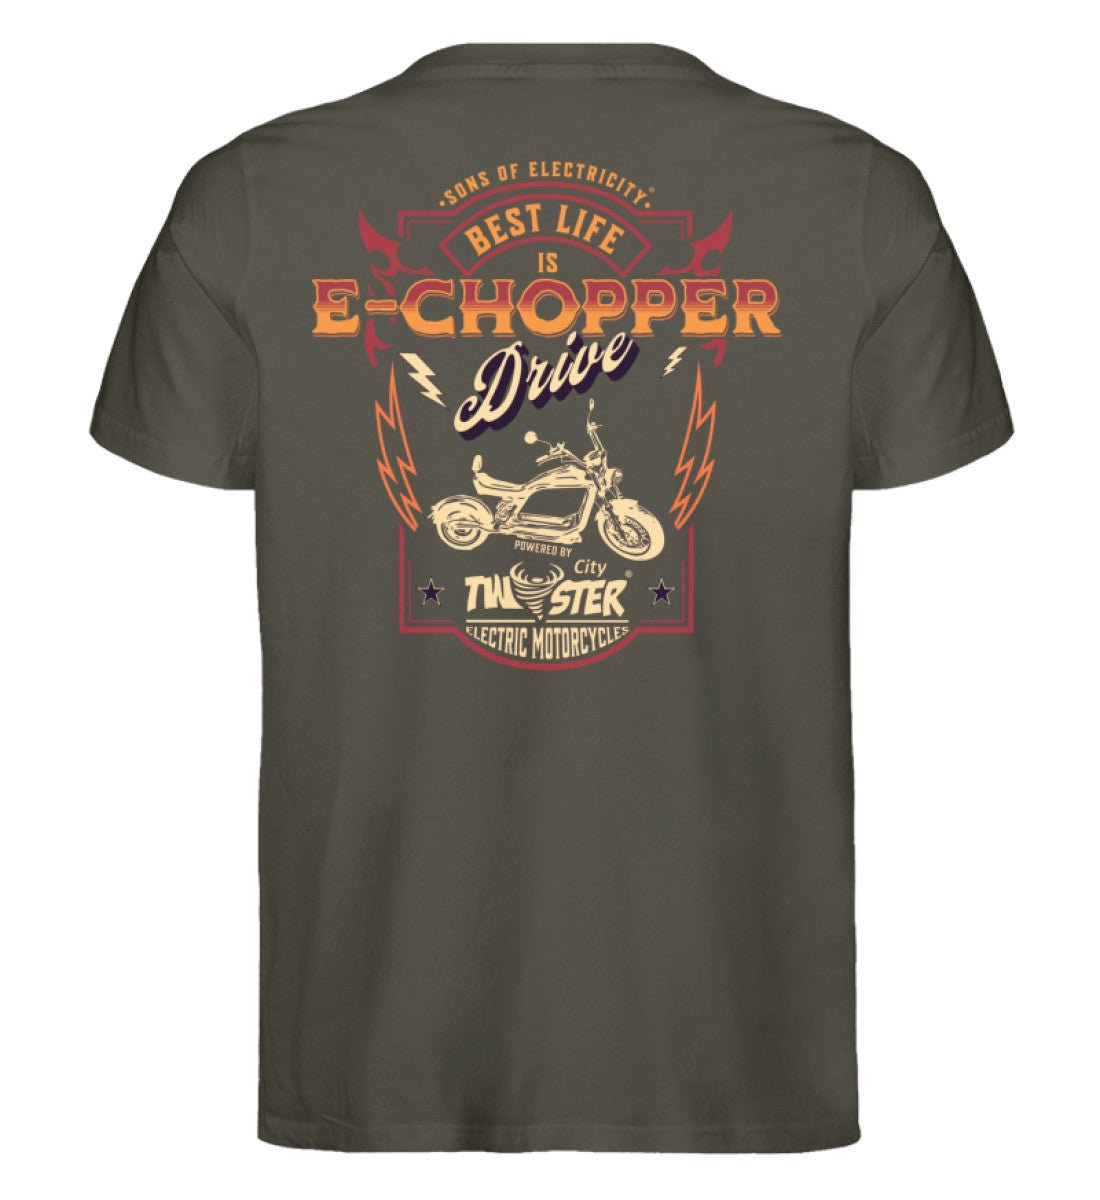 Organic Premium E-Chopper T-Shirt: SONS OF ELECTRICITY- Best